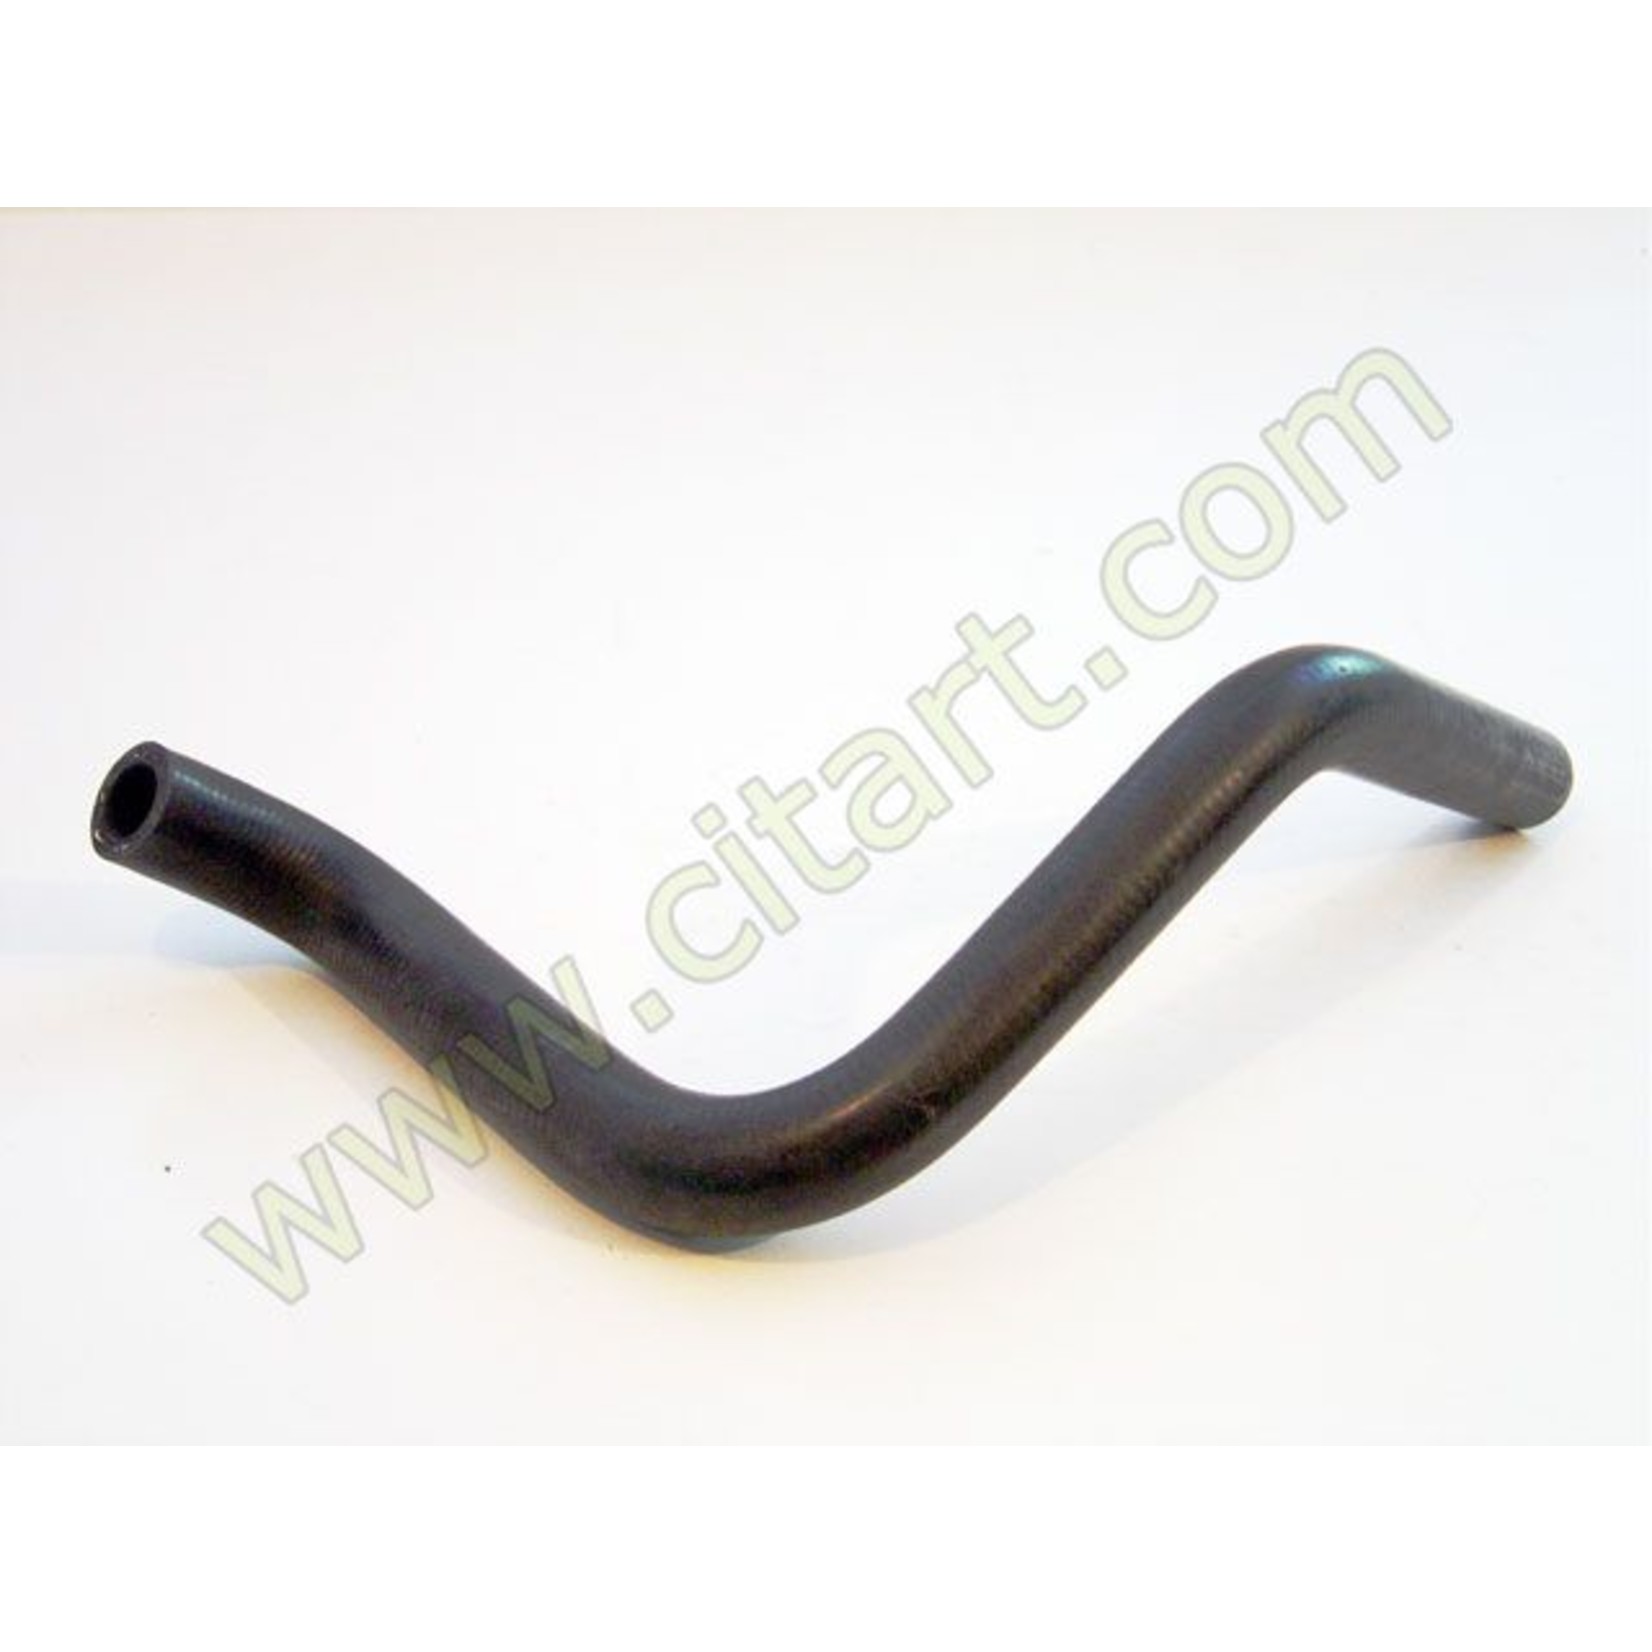 Flexible pipe -03/72 Nr Org: 5415547